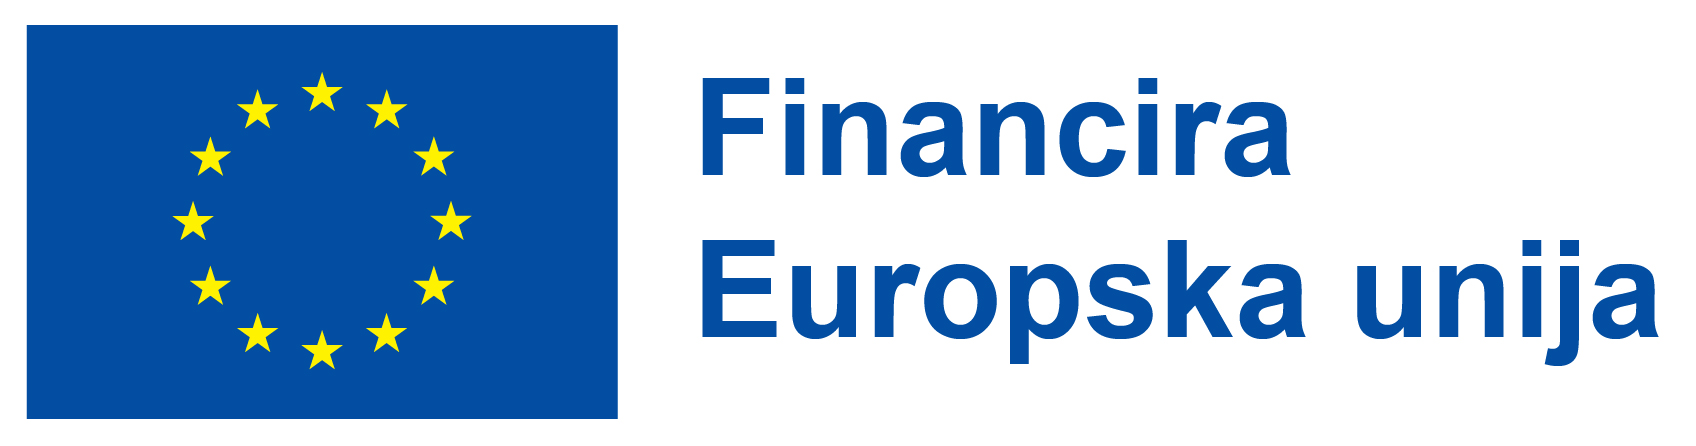 Financira Europska unija